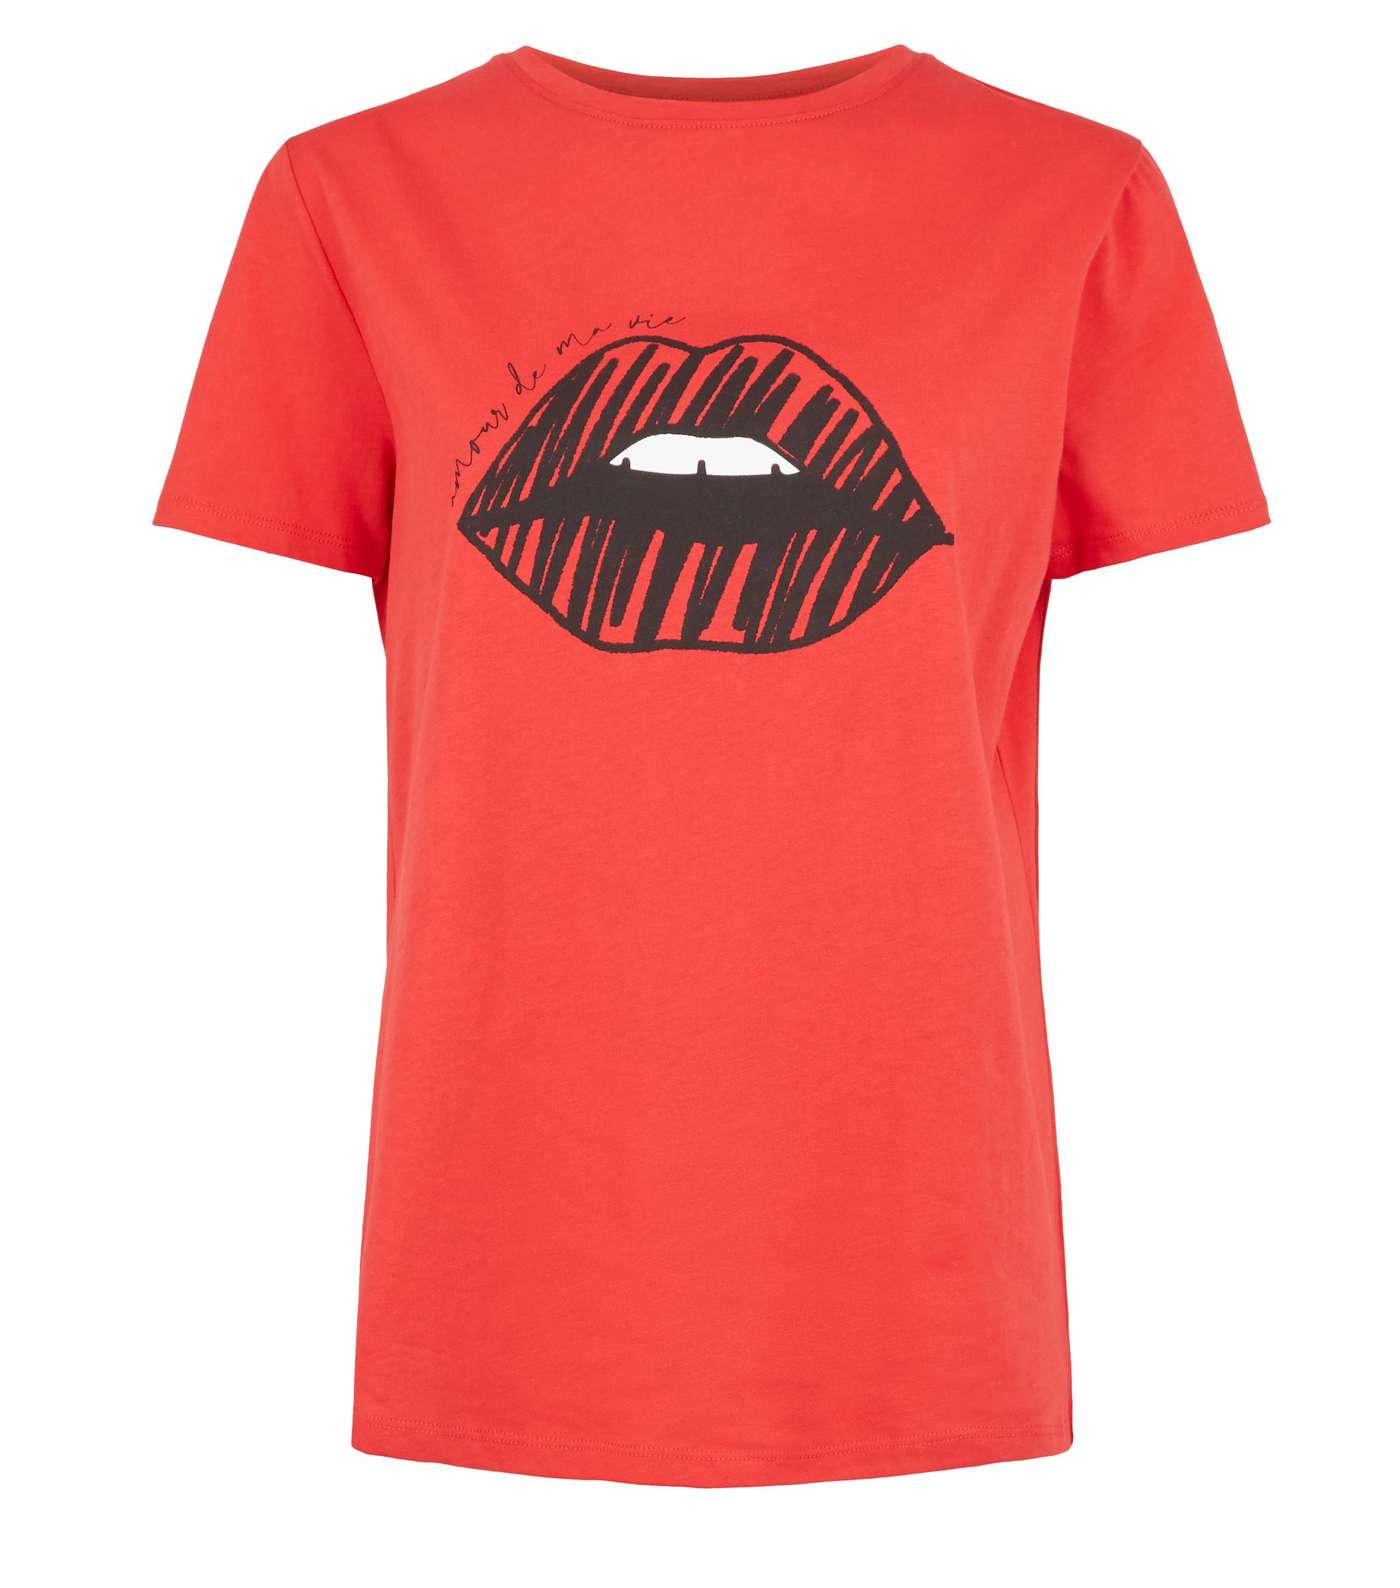 Red Lips Sketch Print Slogan T-Shirt Image 4